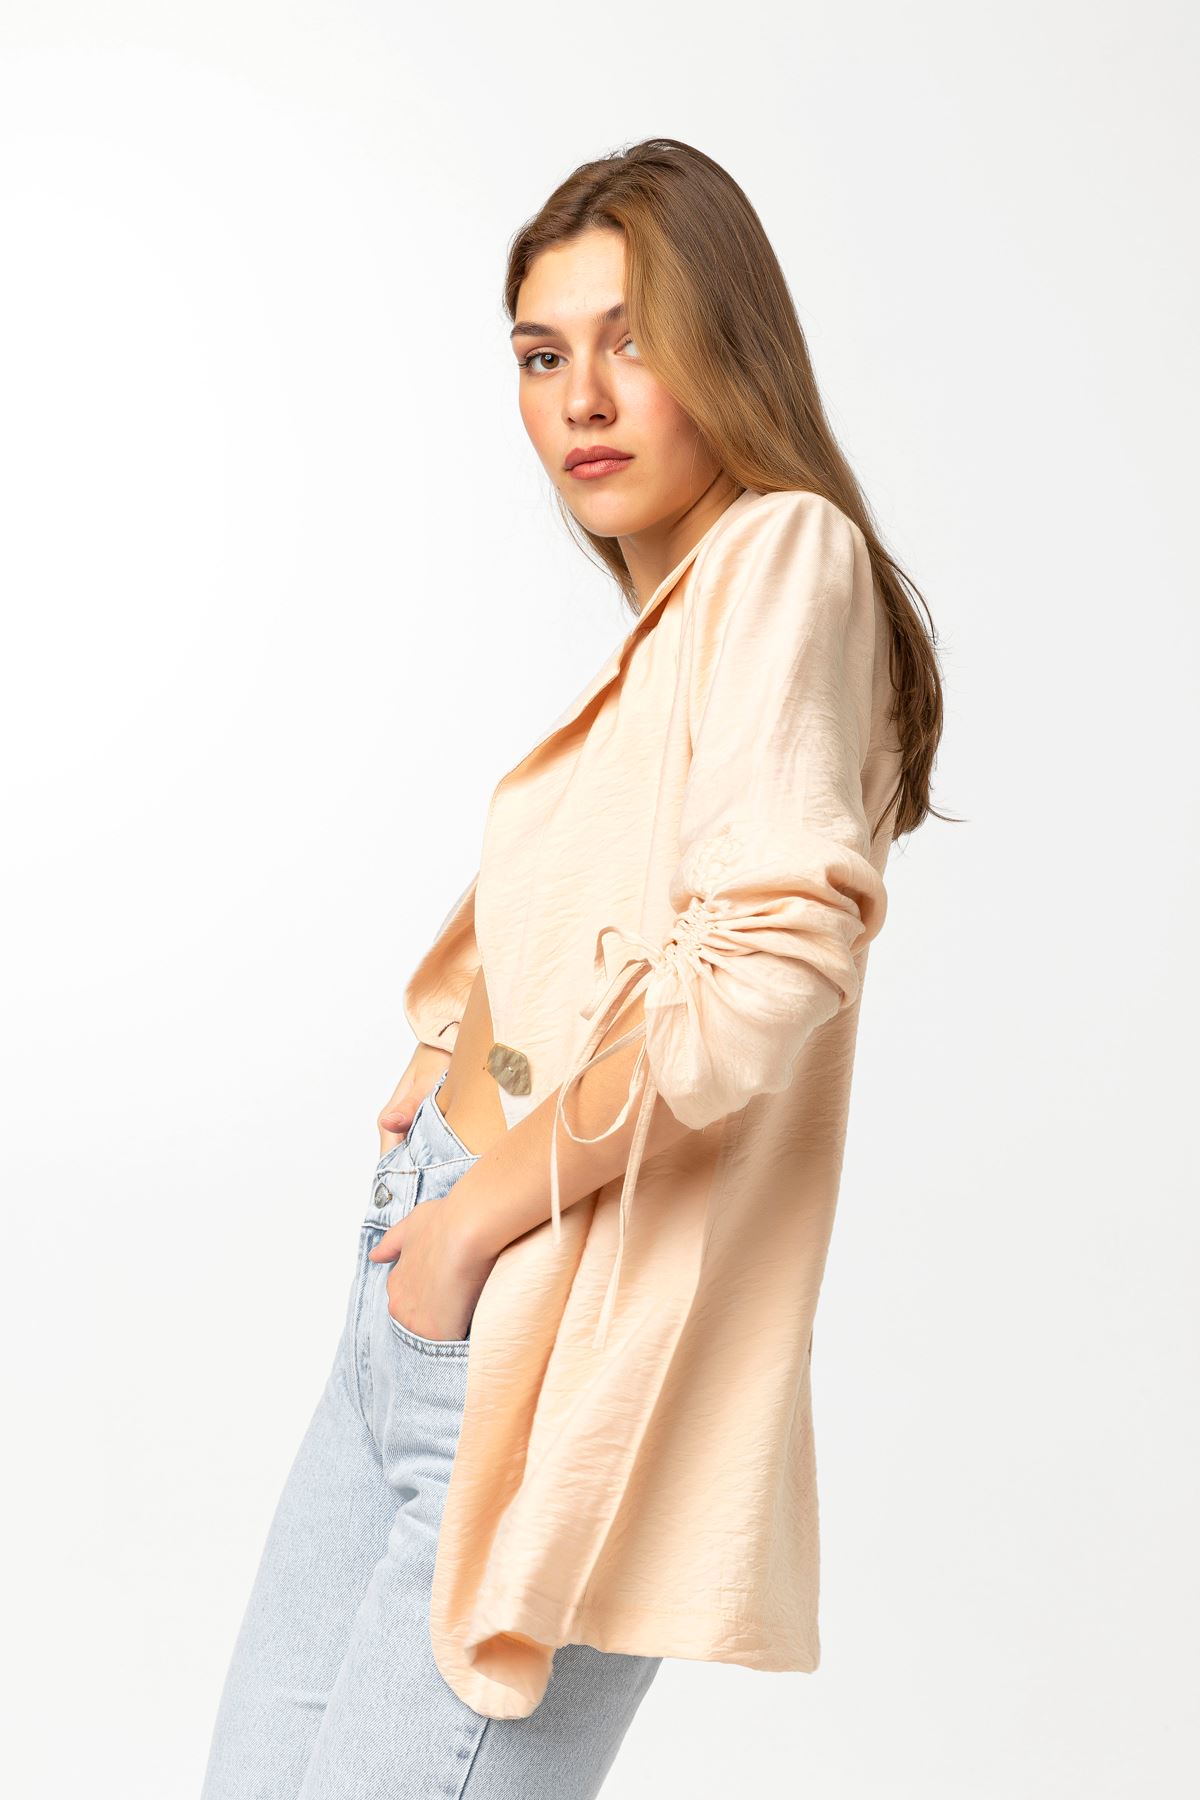 Aerobin Fabric Revere Collar Hip Height Comfy Women Jacket - Beige 